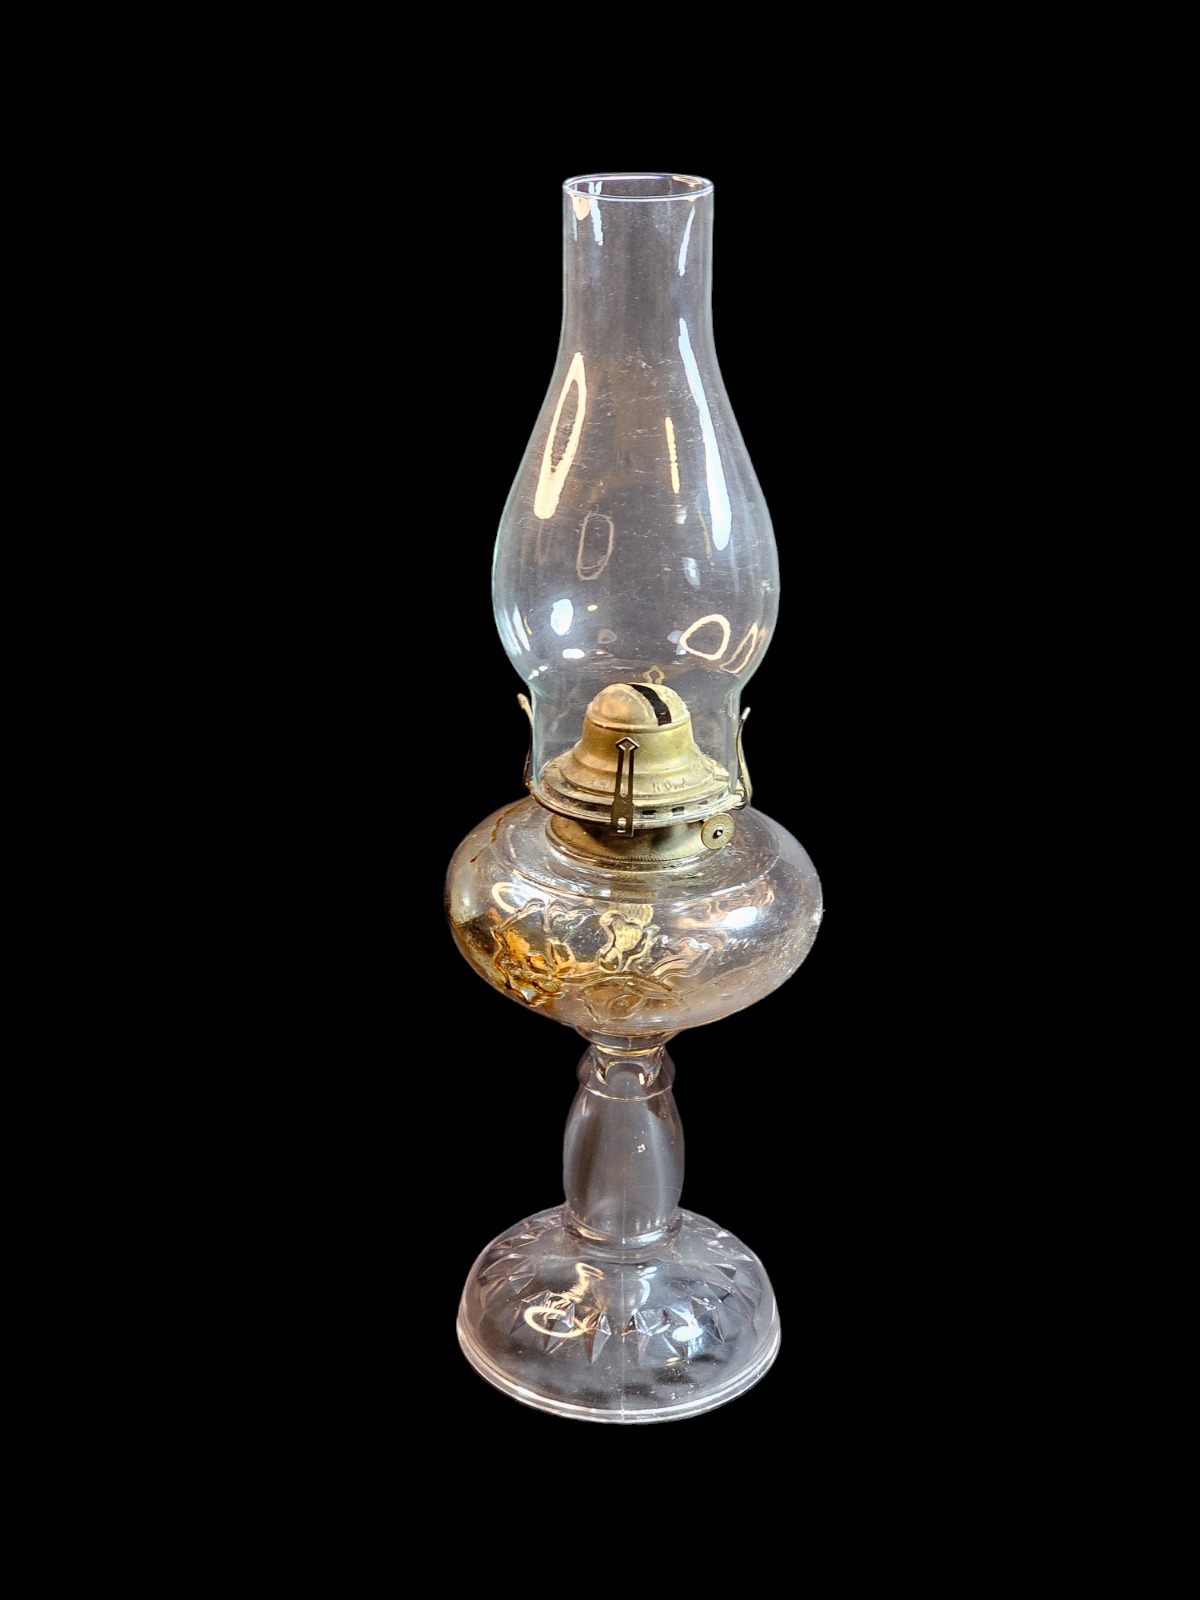 Late 19th Century American Kerosene Lamp with Floral and Diamond Motif